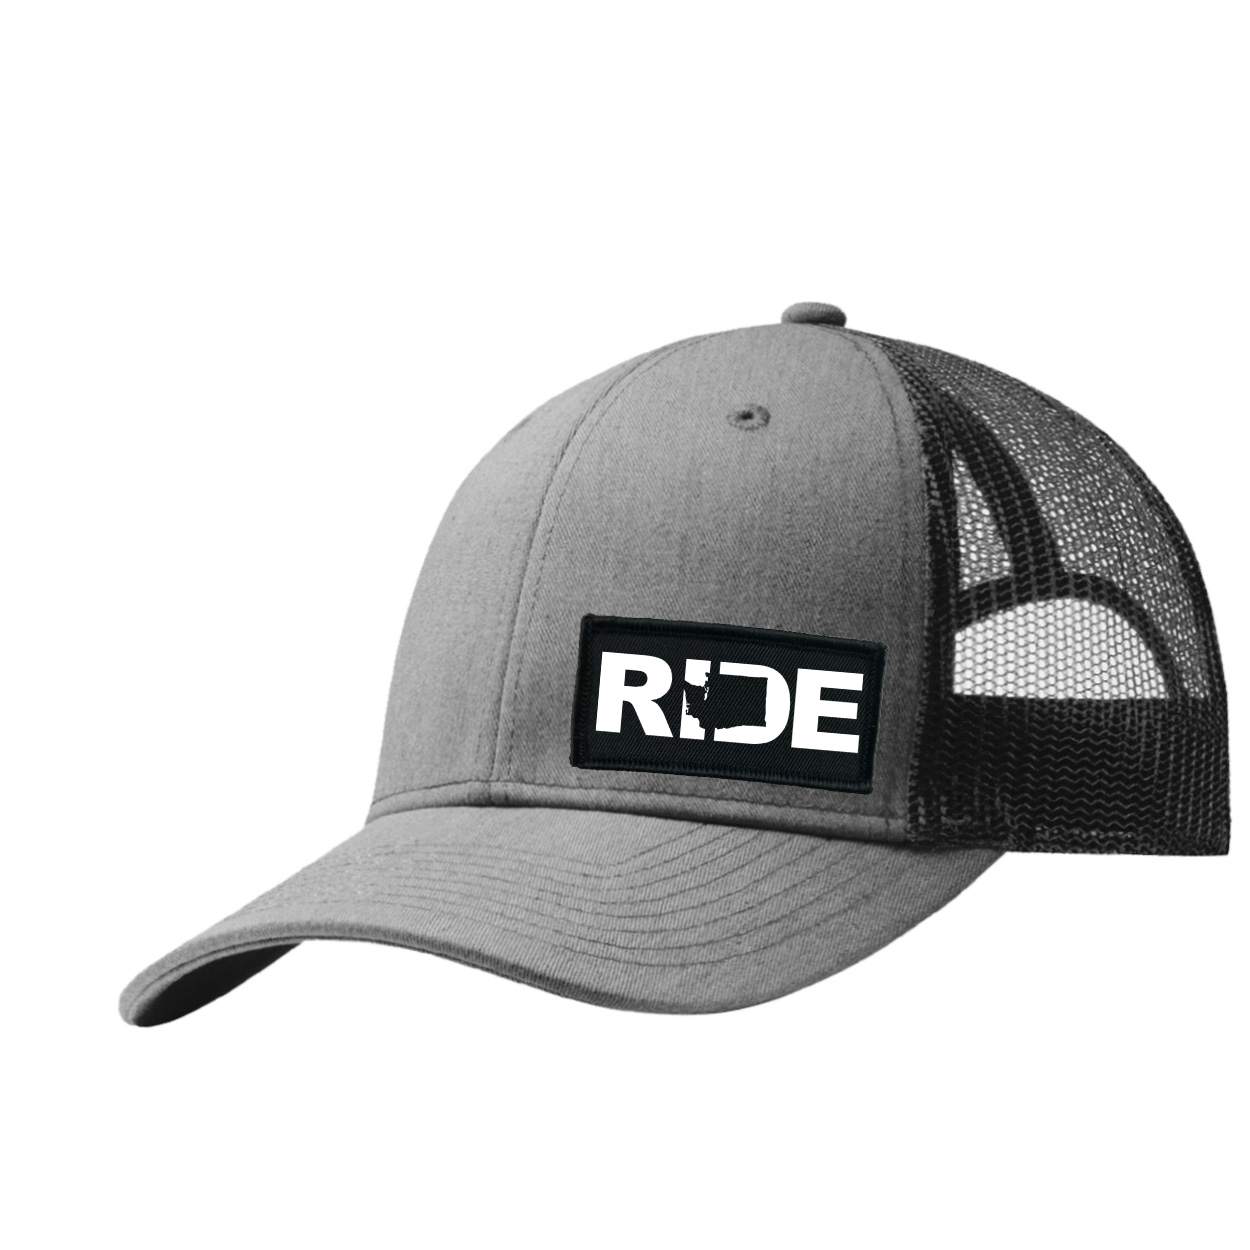 Ride Washington Night Out Woven Patch Snapback Trucker Hat Heather Gray/Black (White Logo)